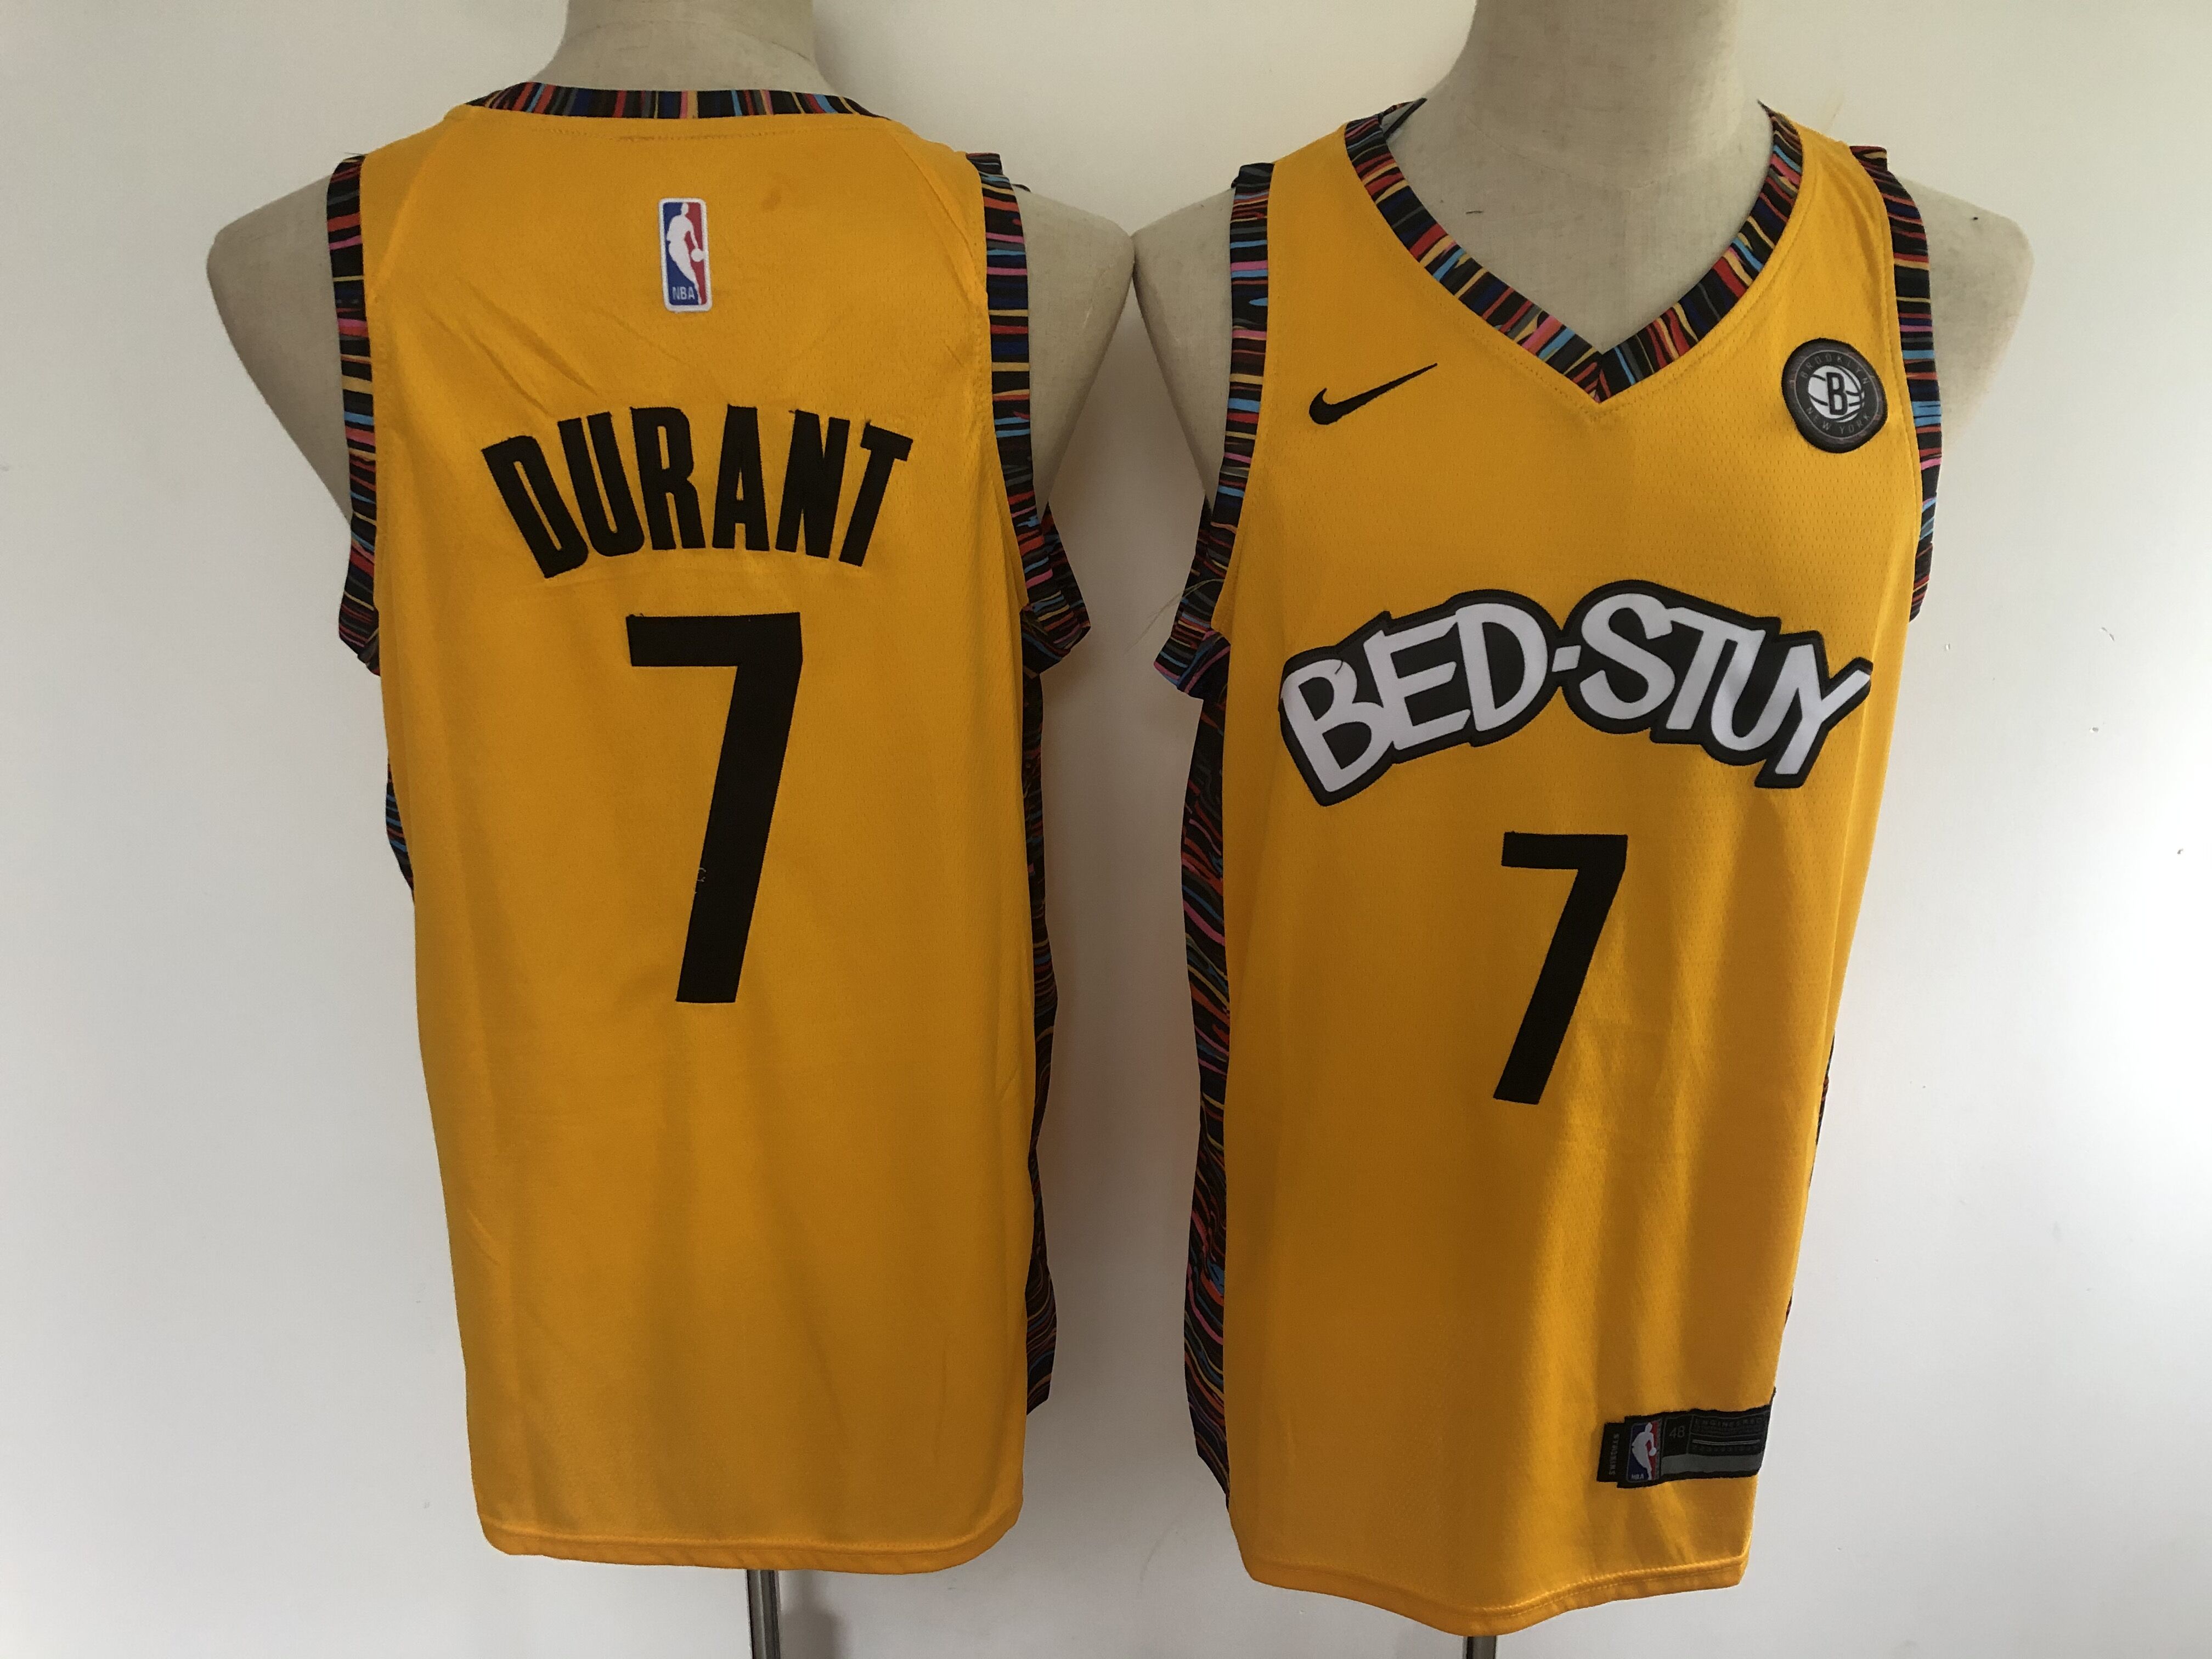 2020 Men Brooklyn Nets #7 Durant yellow Nike Game NBA Jerseys